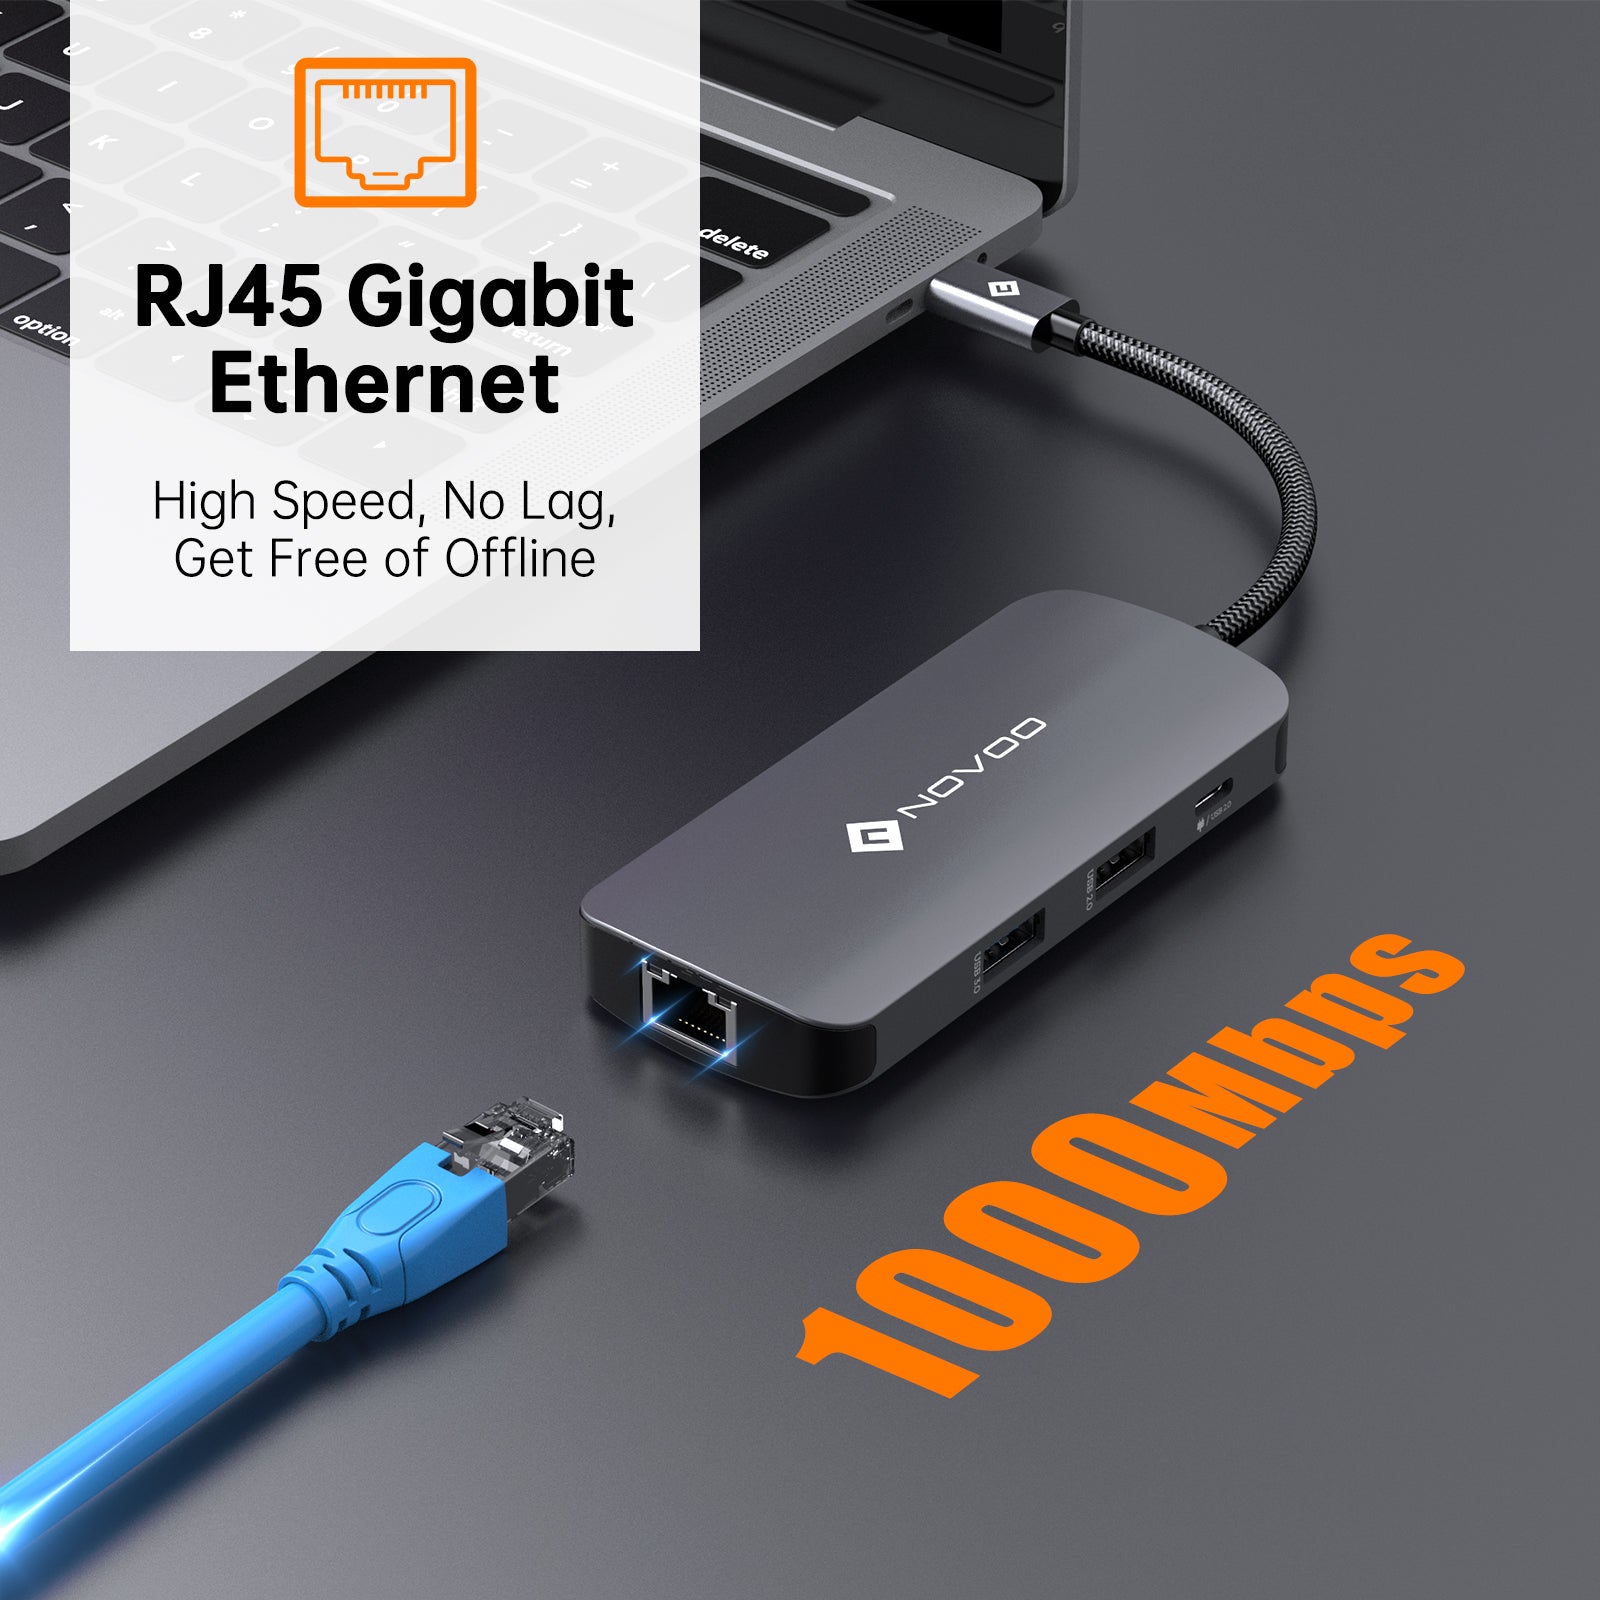 Adaptateur Multiport USB C Novoo (Vendeur Tiers) –